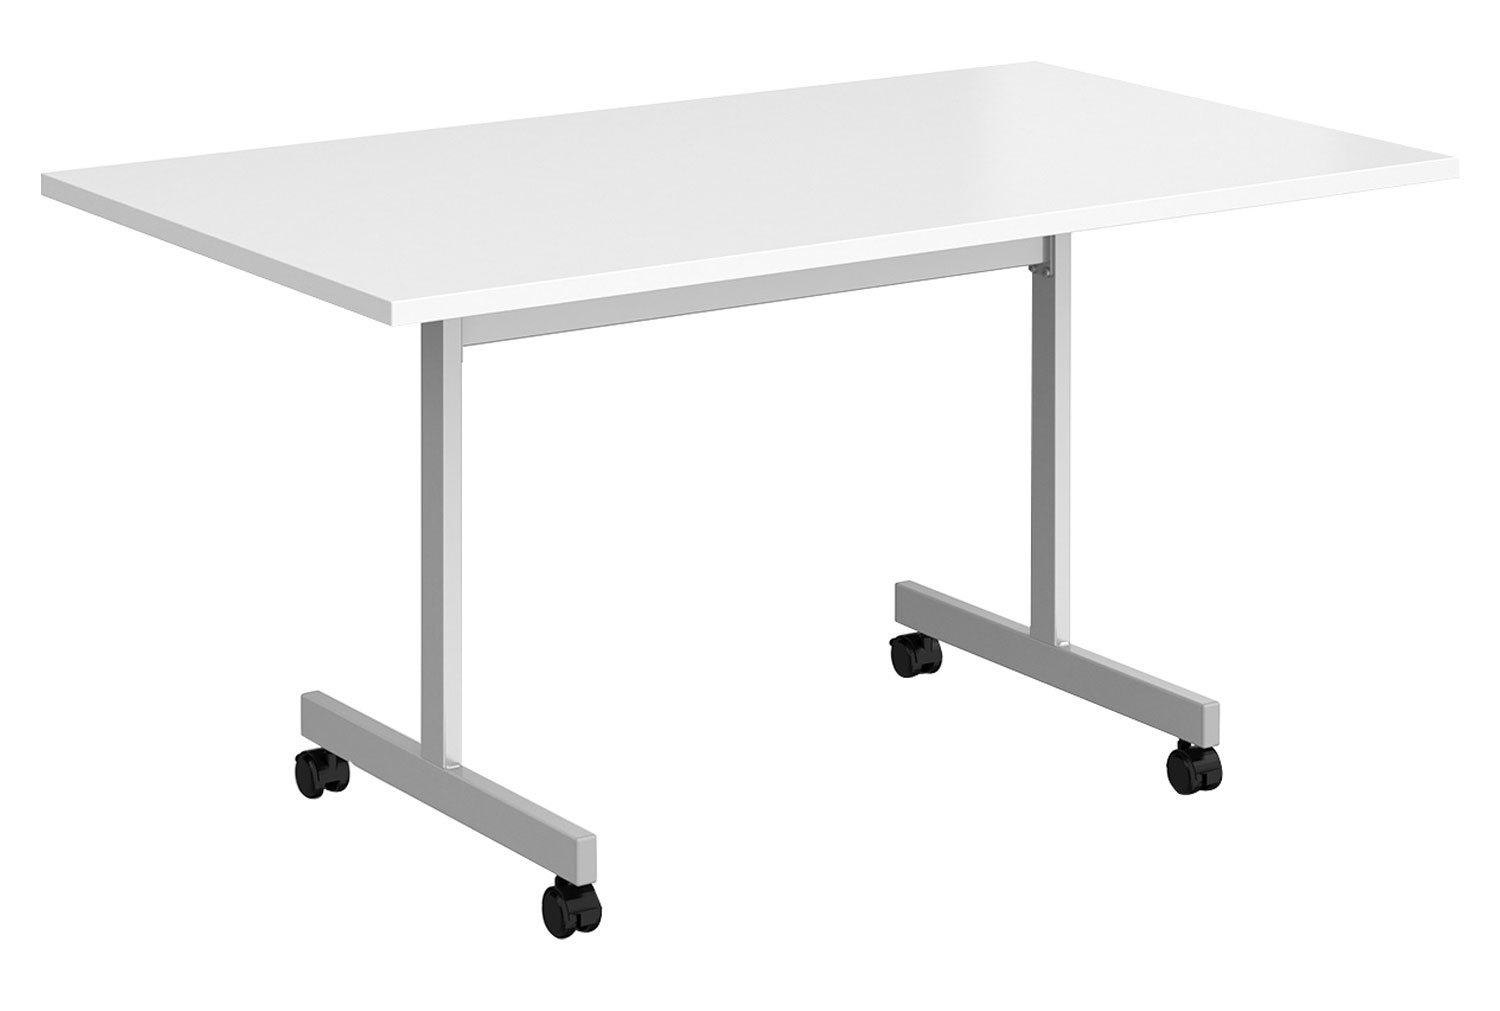 Foxham Rectangular Flip Top Meeting Tables, 140wx80dx73h (cm), White, Fully Installed